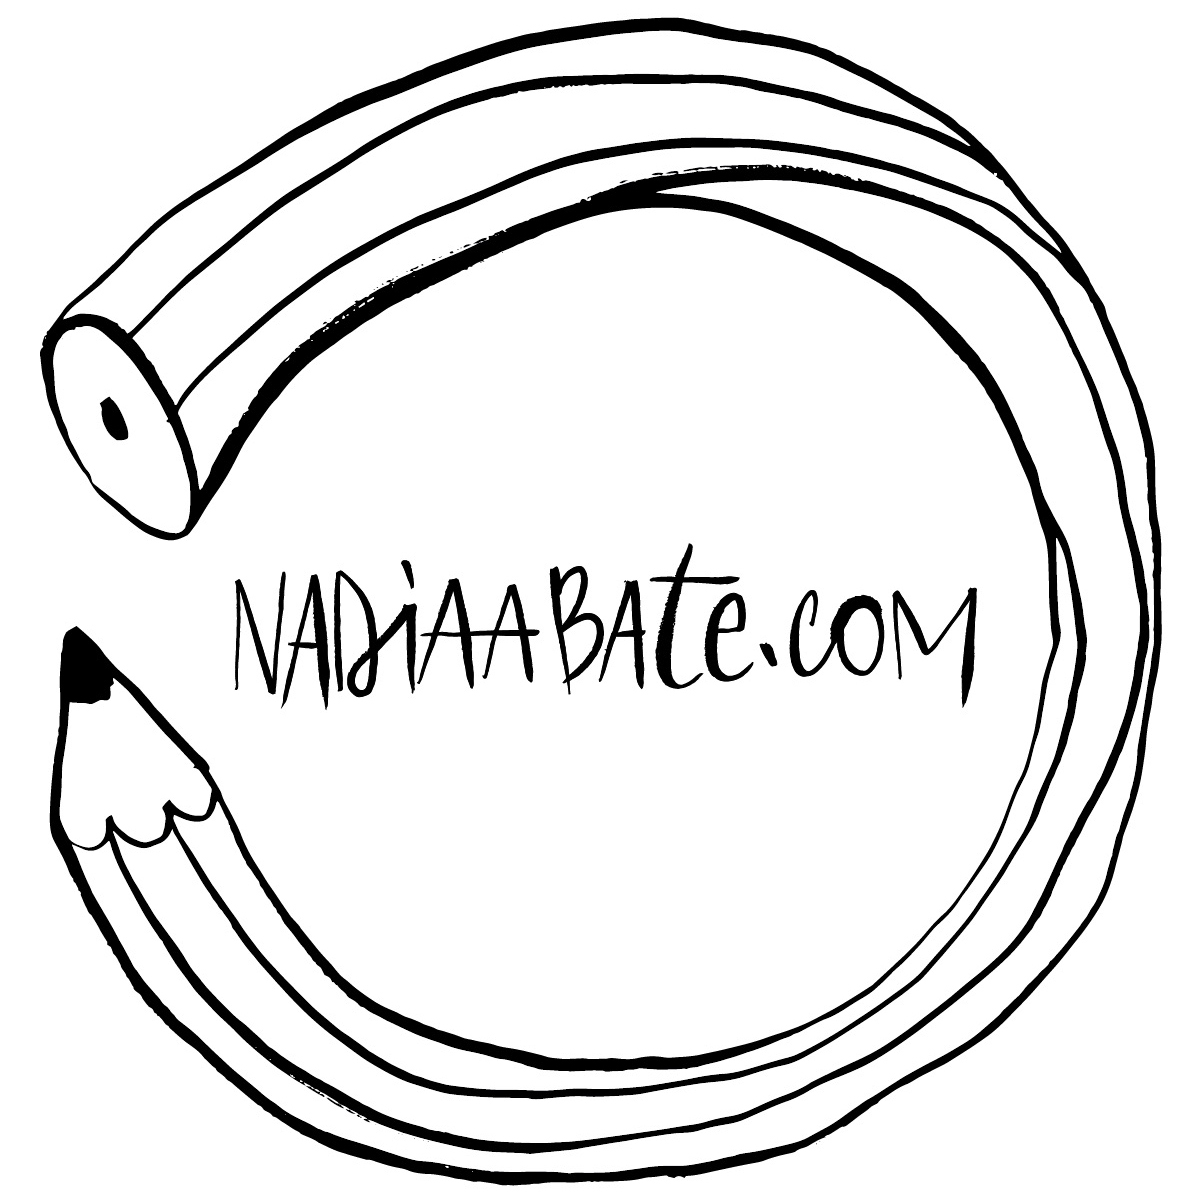 nadiaabate.com